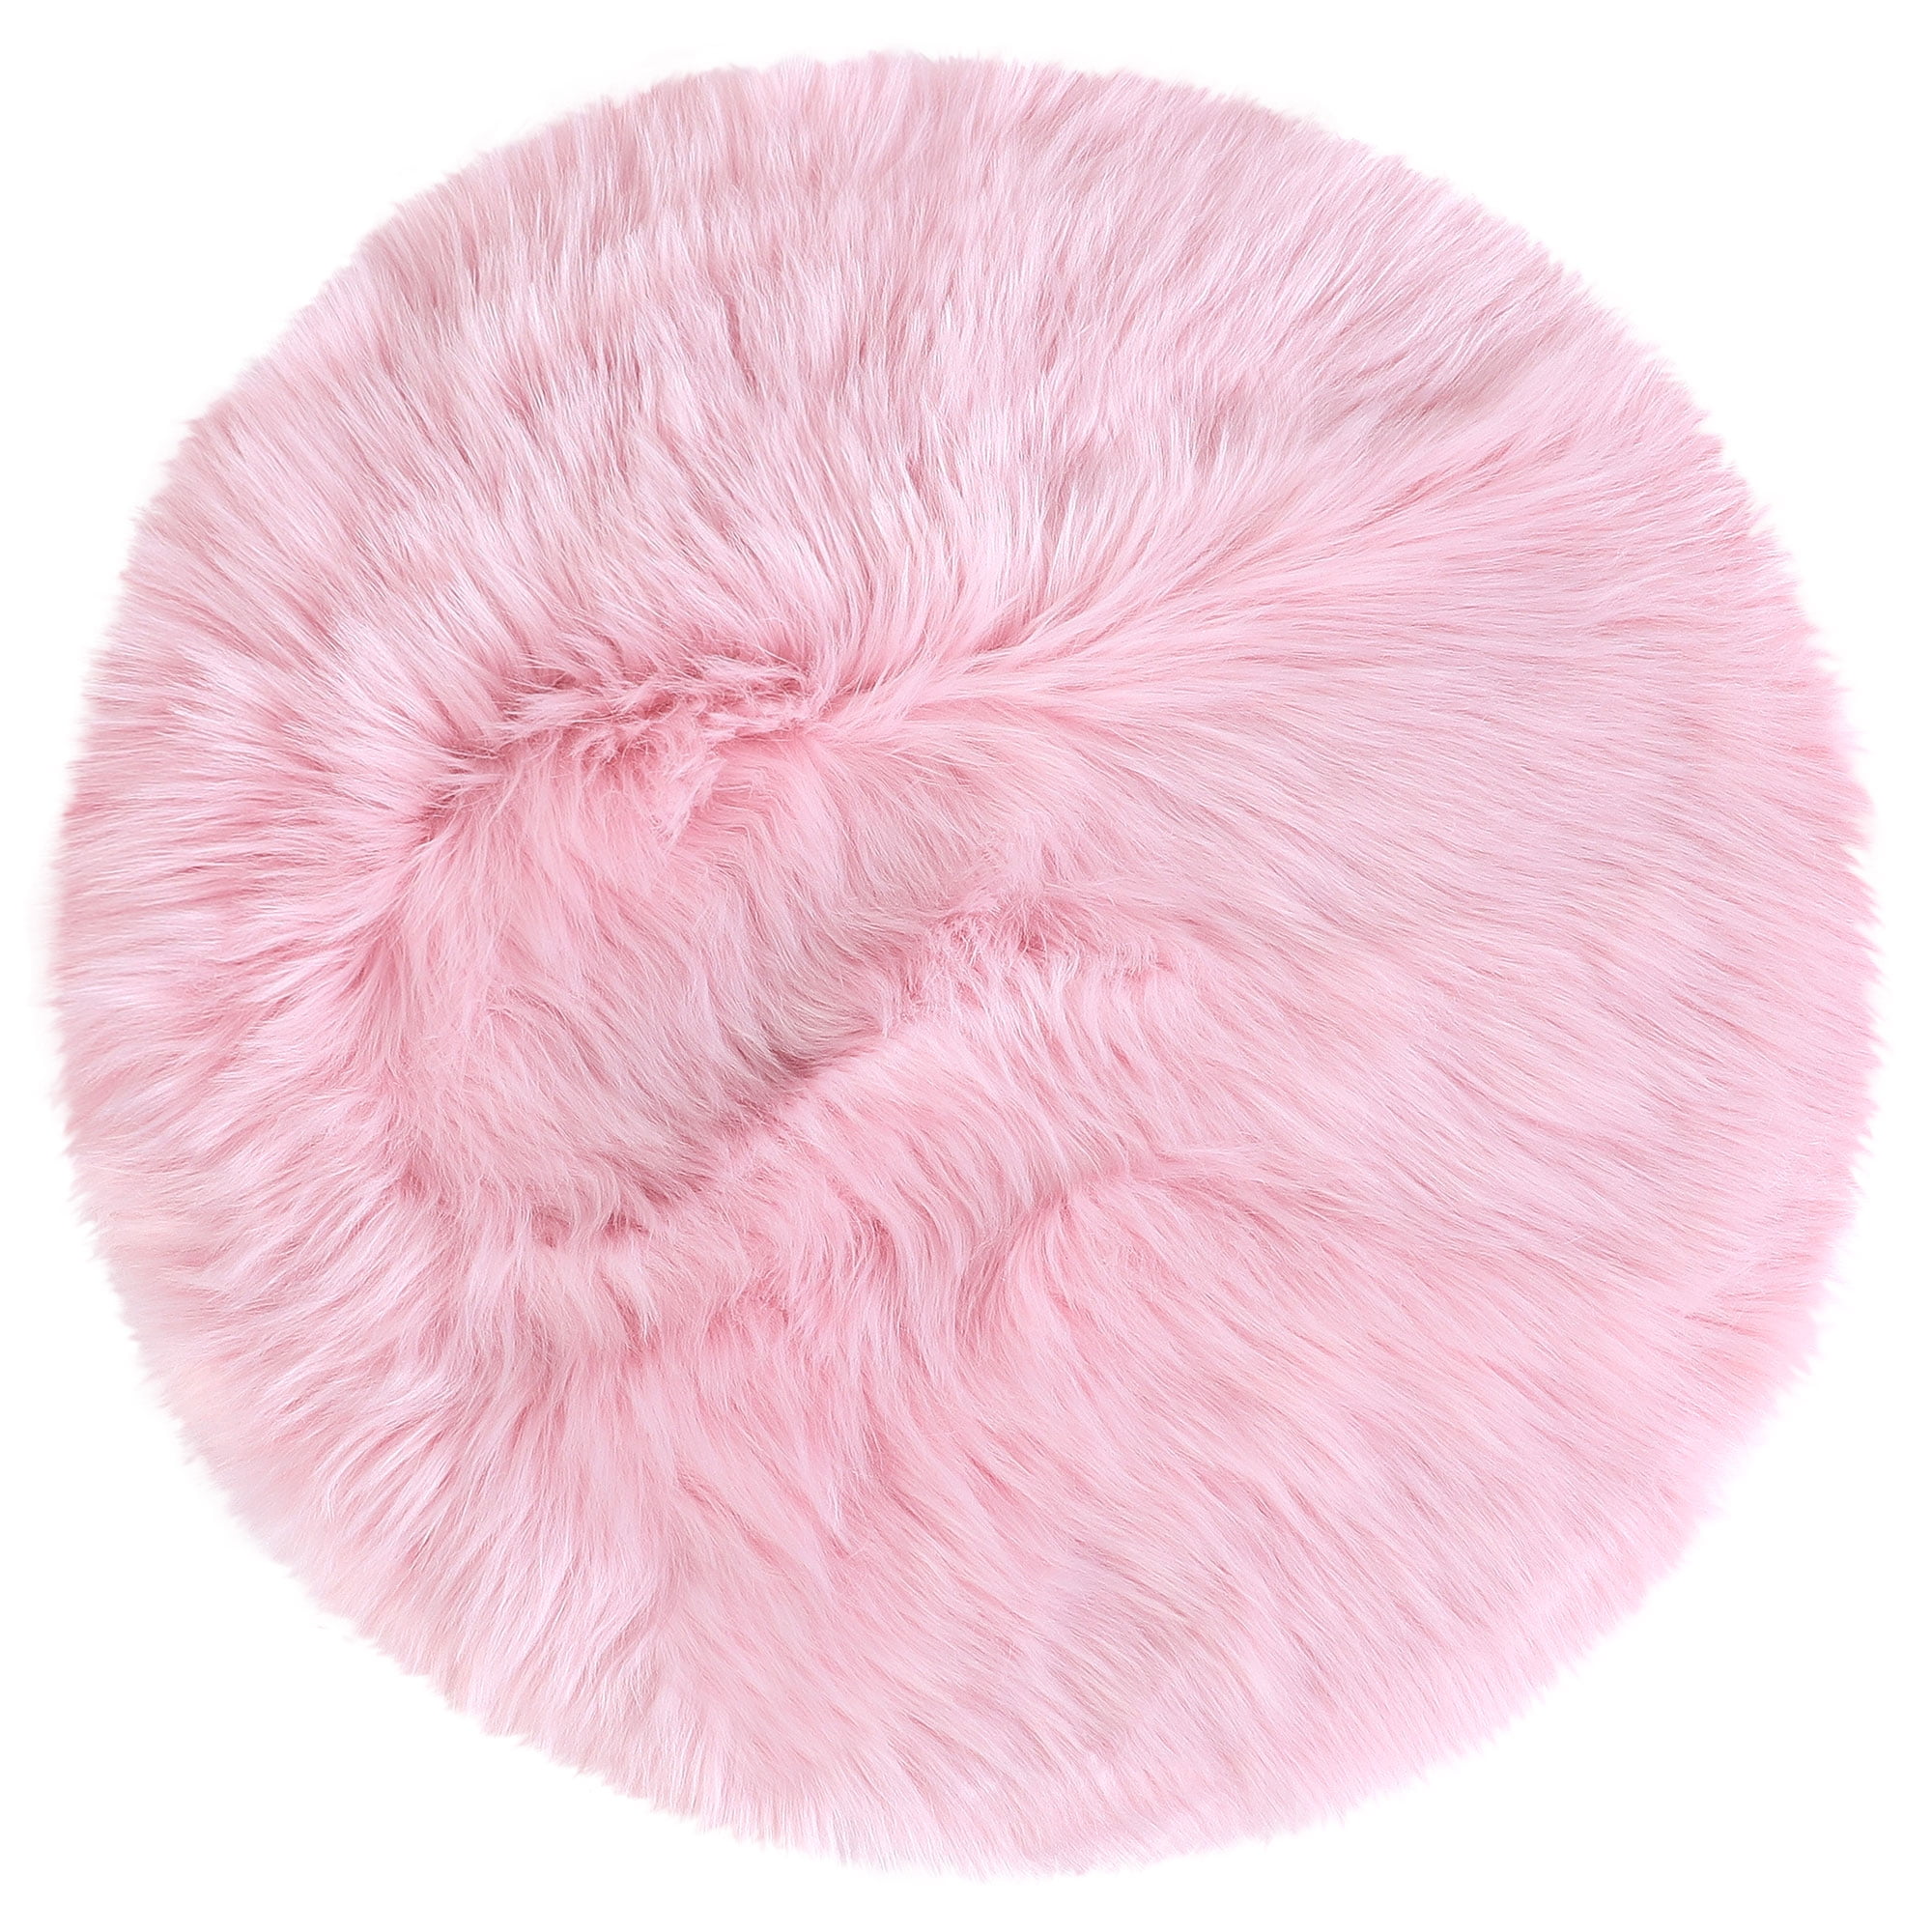 Faux Fur Sheepskin Plush Area Rug Light, Light Pink Fur Rug